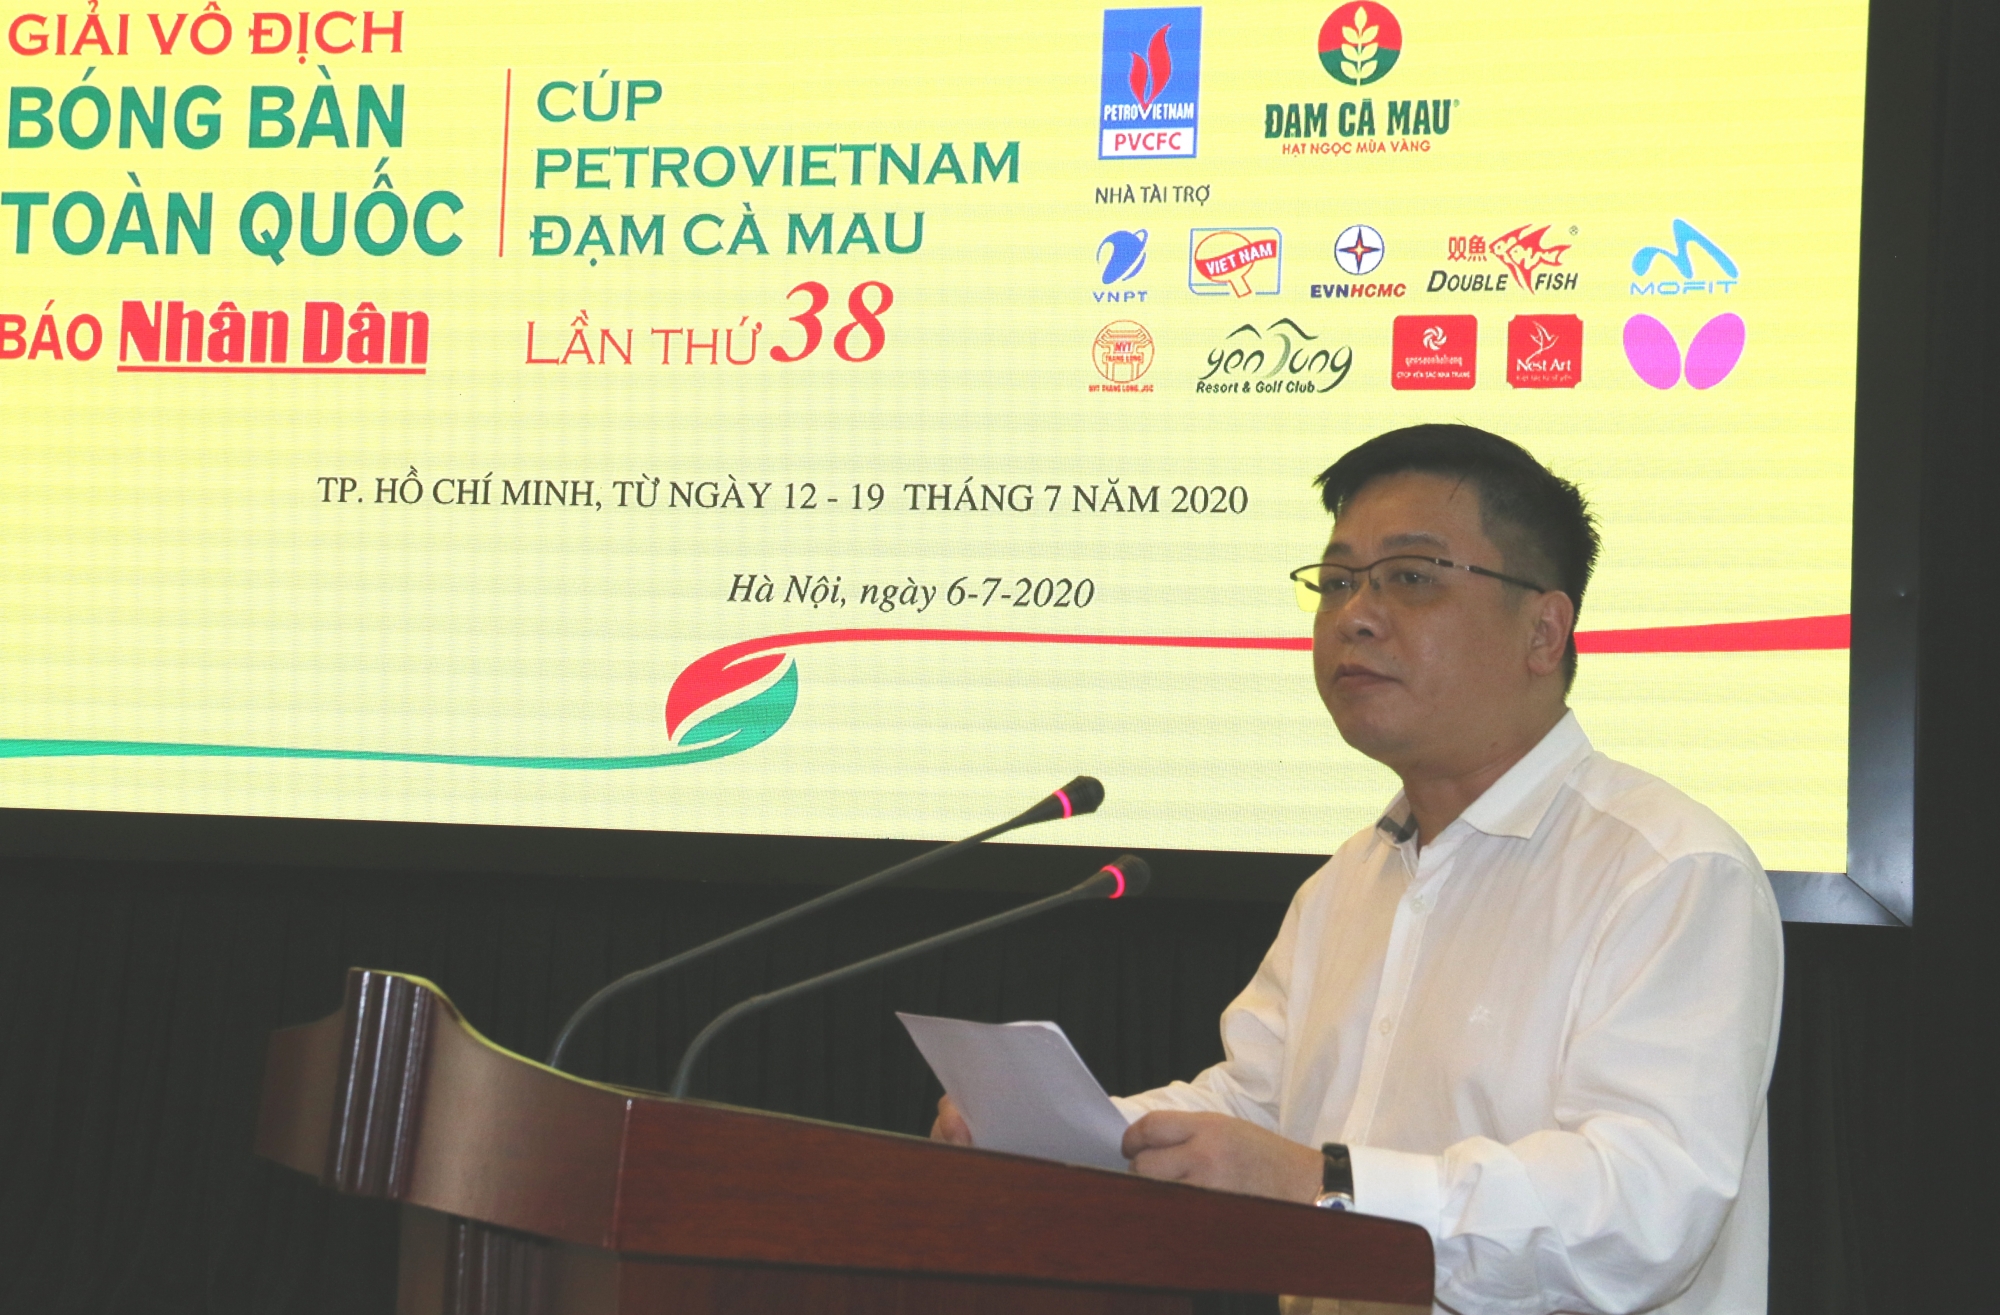 175 vdv bong ban tranh cup petrovietnam dam ca mau 2020